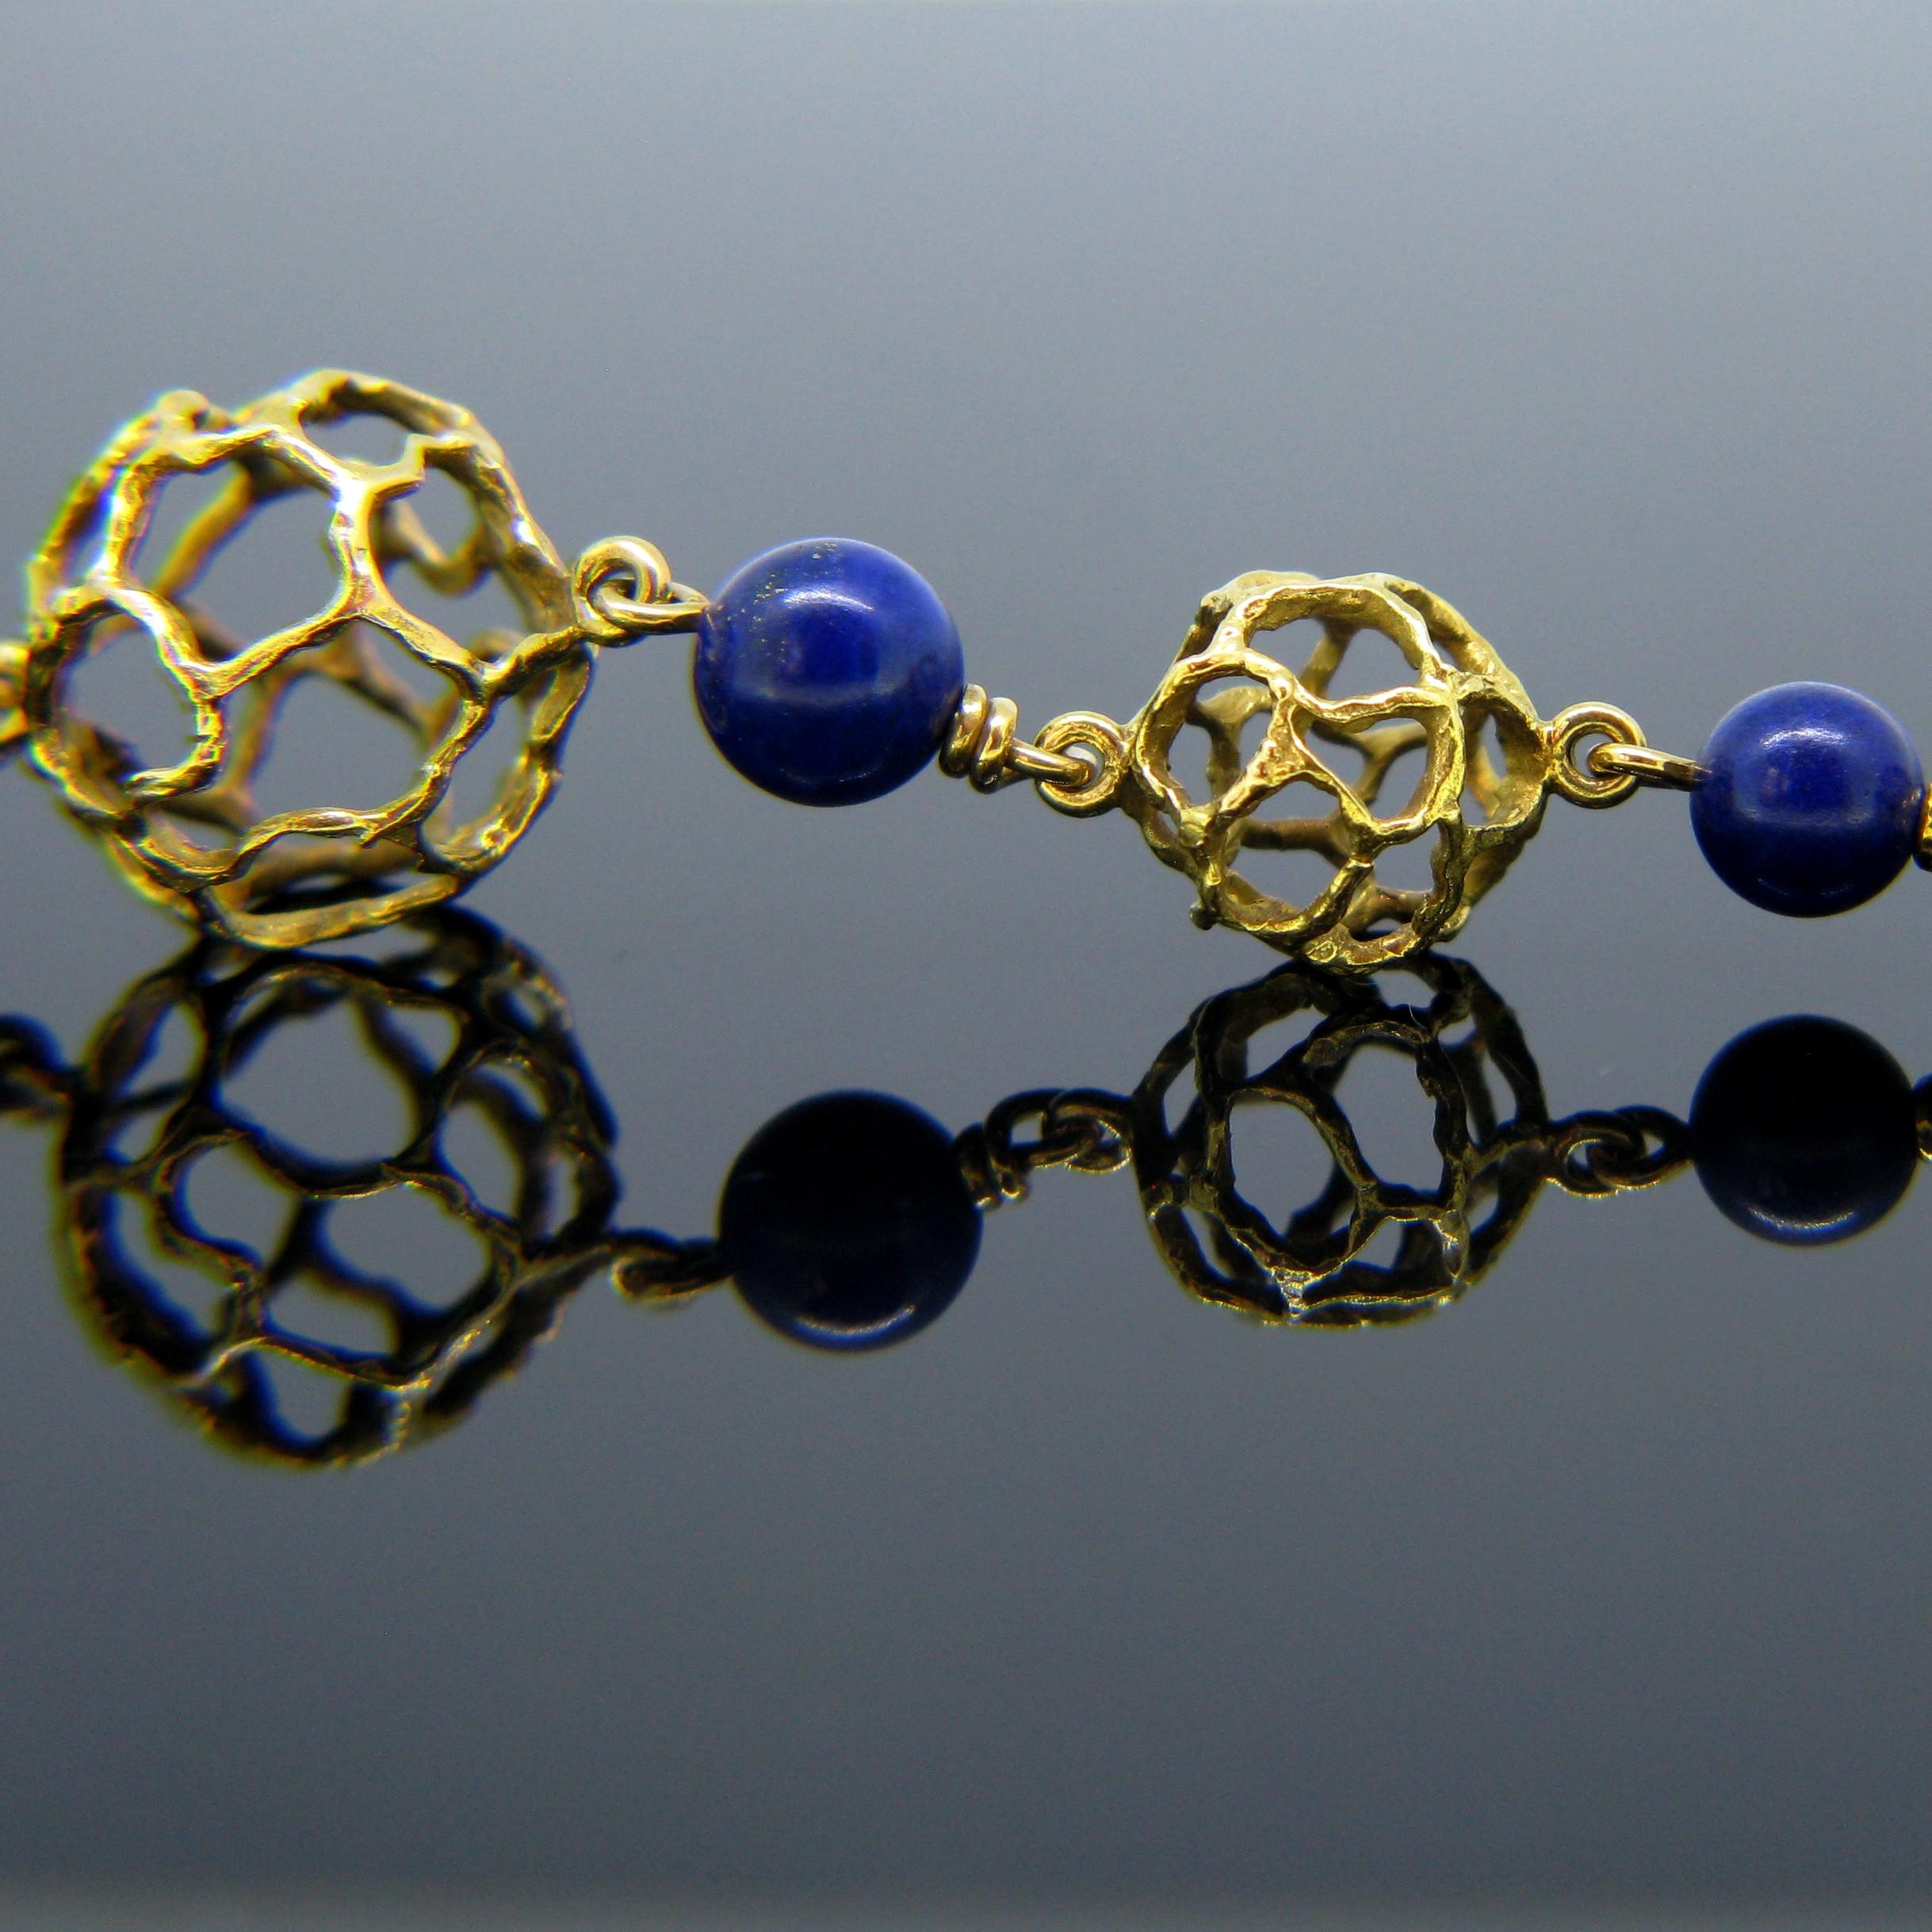 Chaumet Paris Lapis Lazuli Beads Textured Yellow Gold Bangle Bracelet 5